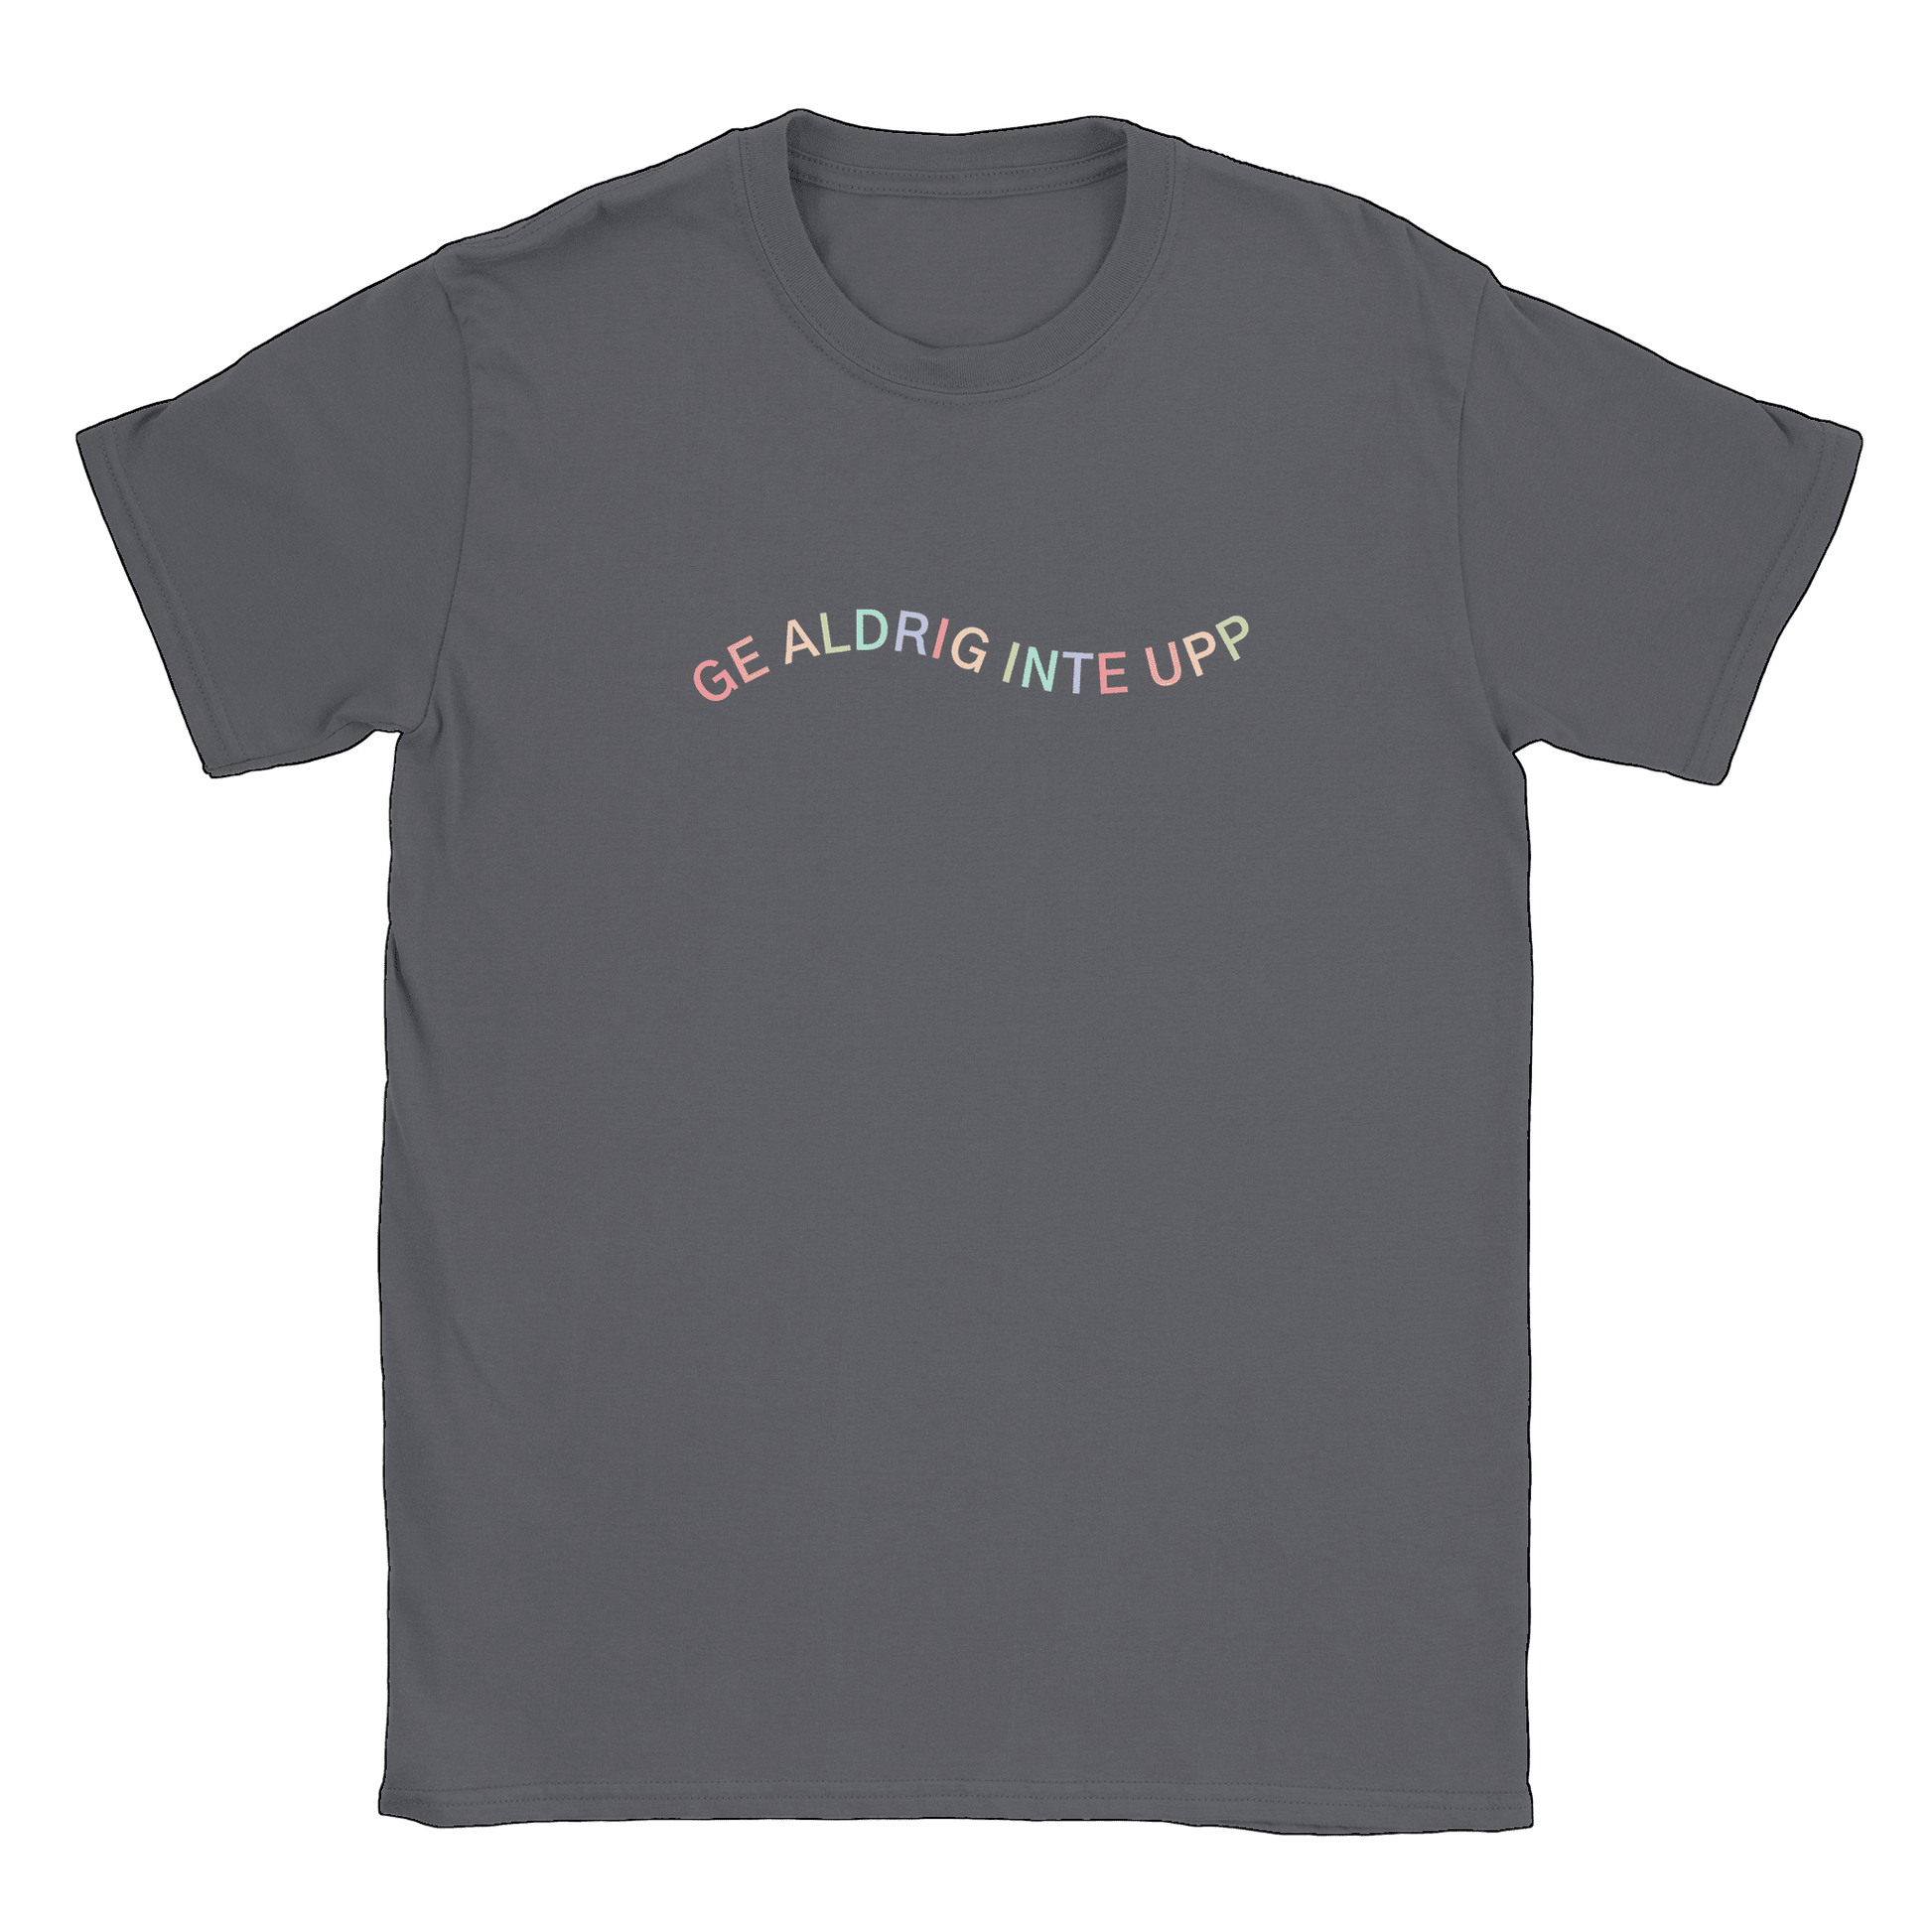 Ge aldrig inte upp - T-shirt Charcoal